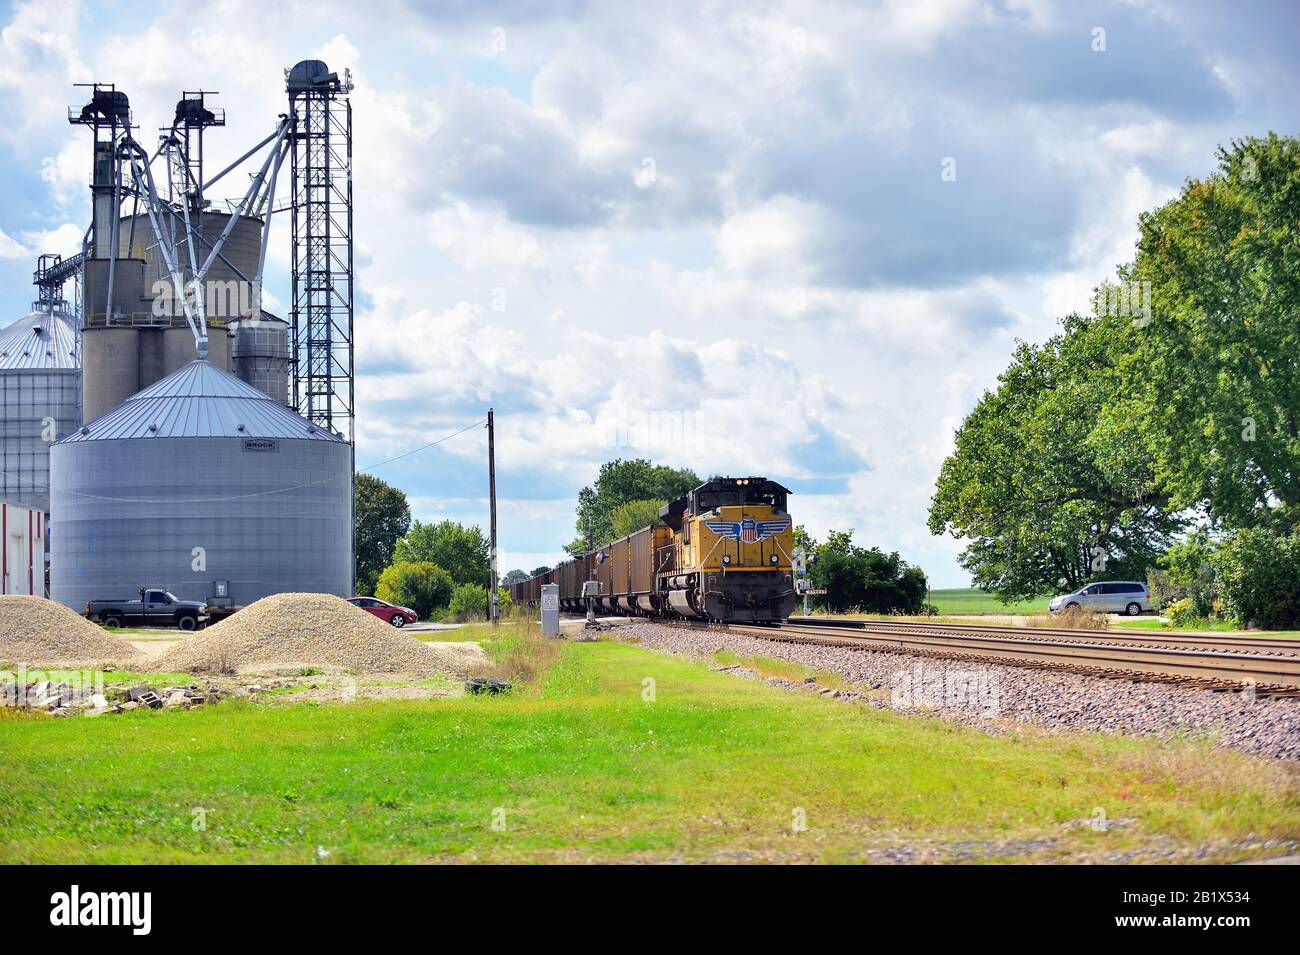 Malta, Illinois, USA. A helper locomotive unit assists a Union Pacific coal train, lead by three locomotive units, as it passes a farming cooperative. Stock Photo